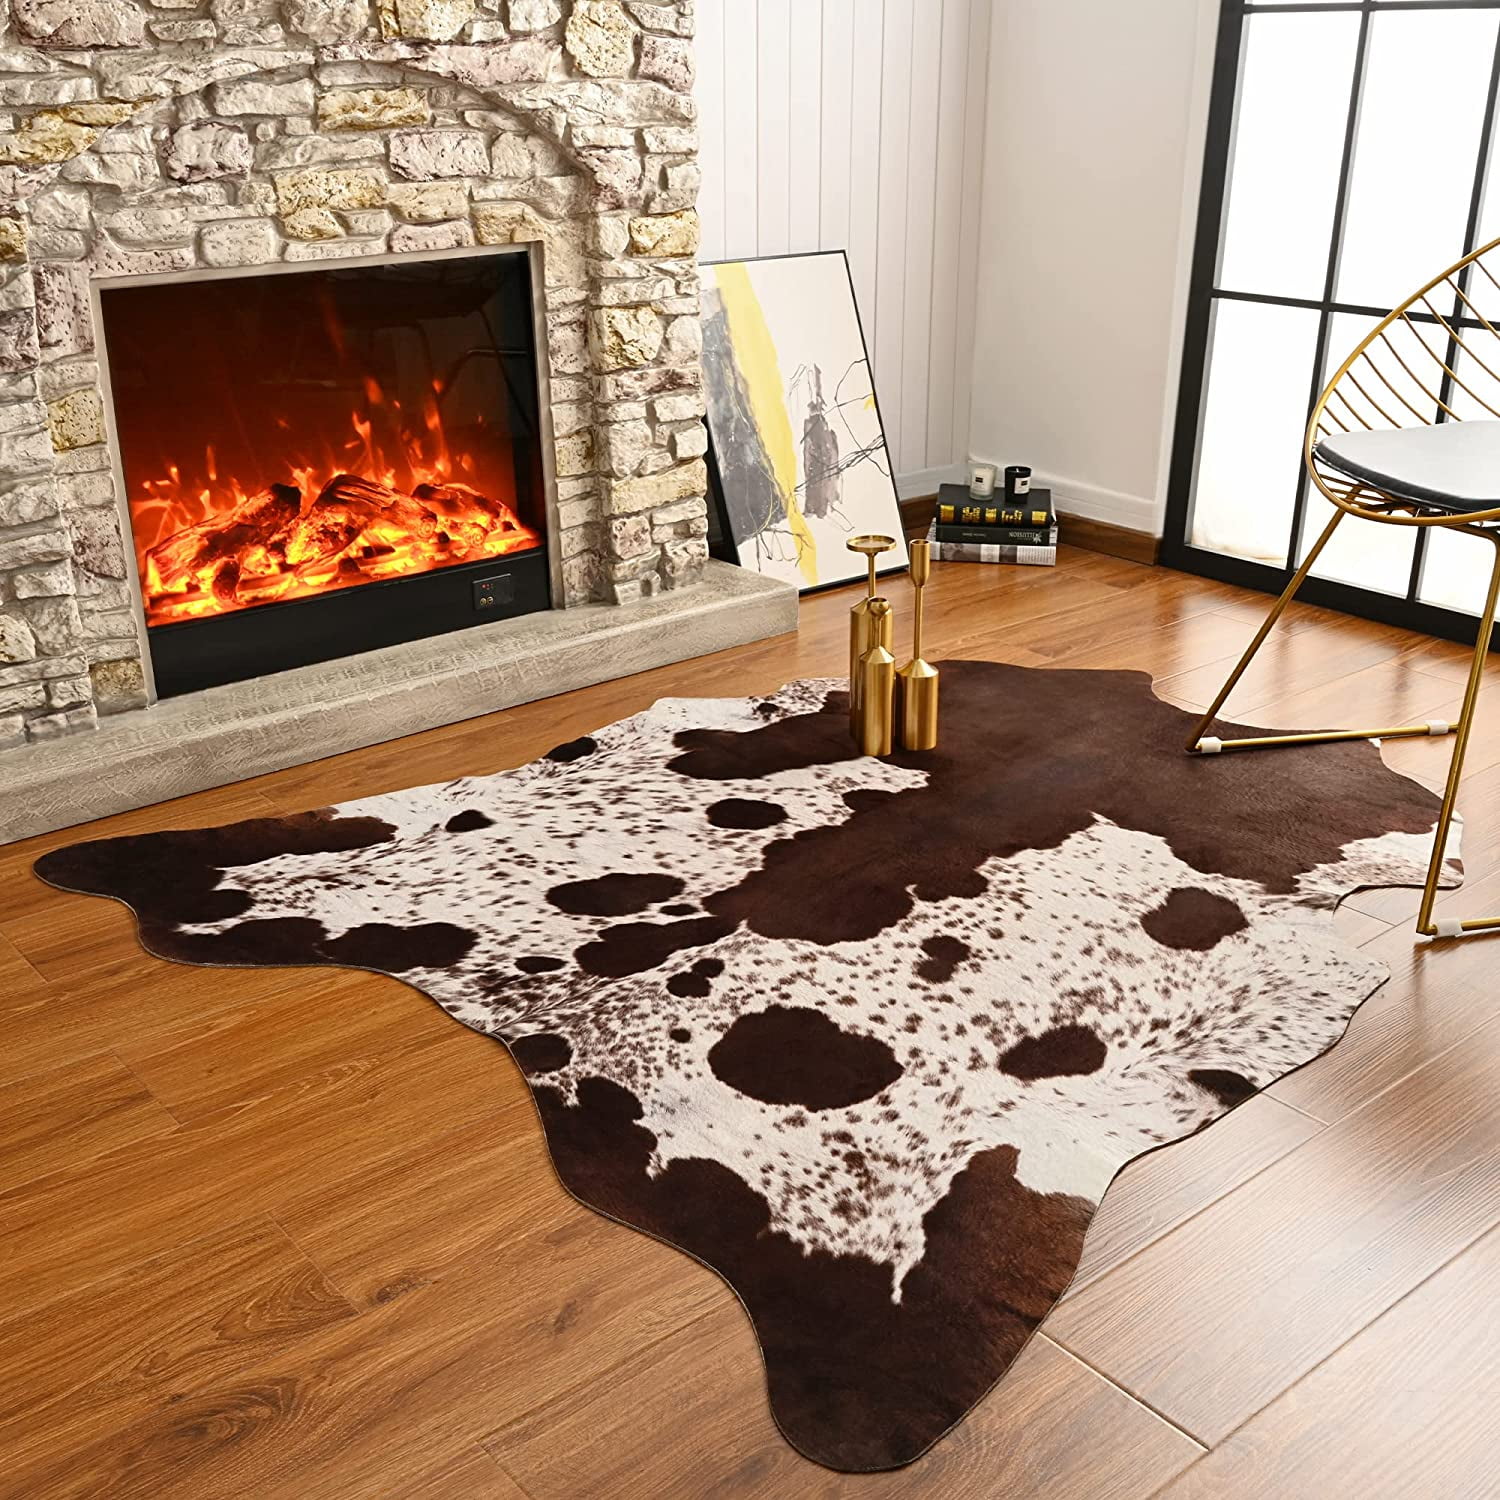 Yj Gwl Faux Cowhide Rug Cow Print Area Rugs Hide Carpet For Bedroom Living Room Home Office Western Decor 5 2 X6 Brown Com